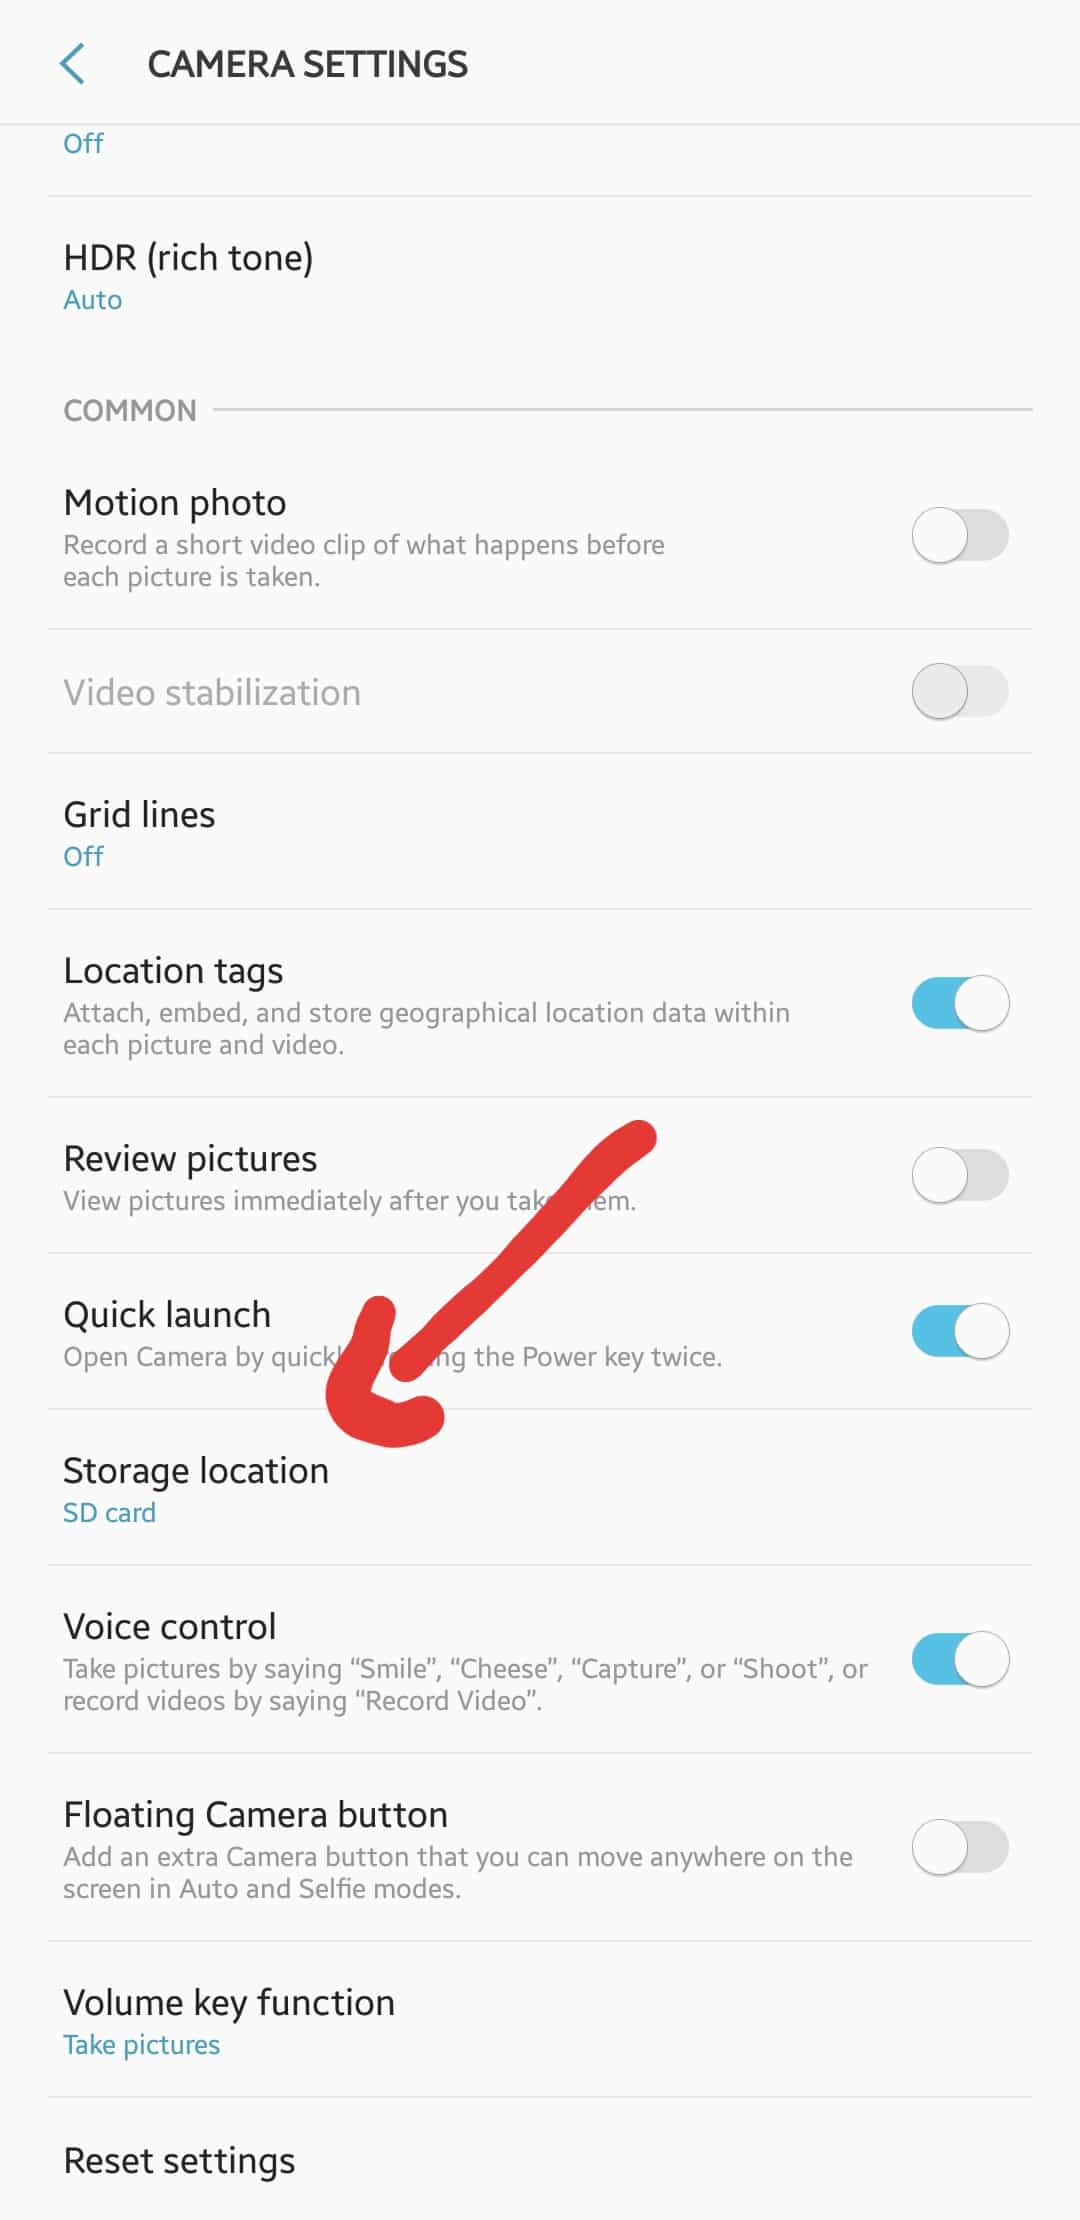 Galaxy S7 default image storage selection